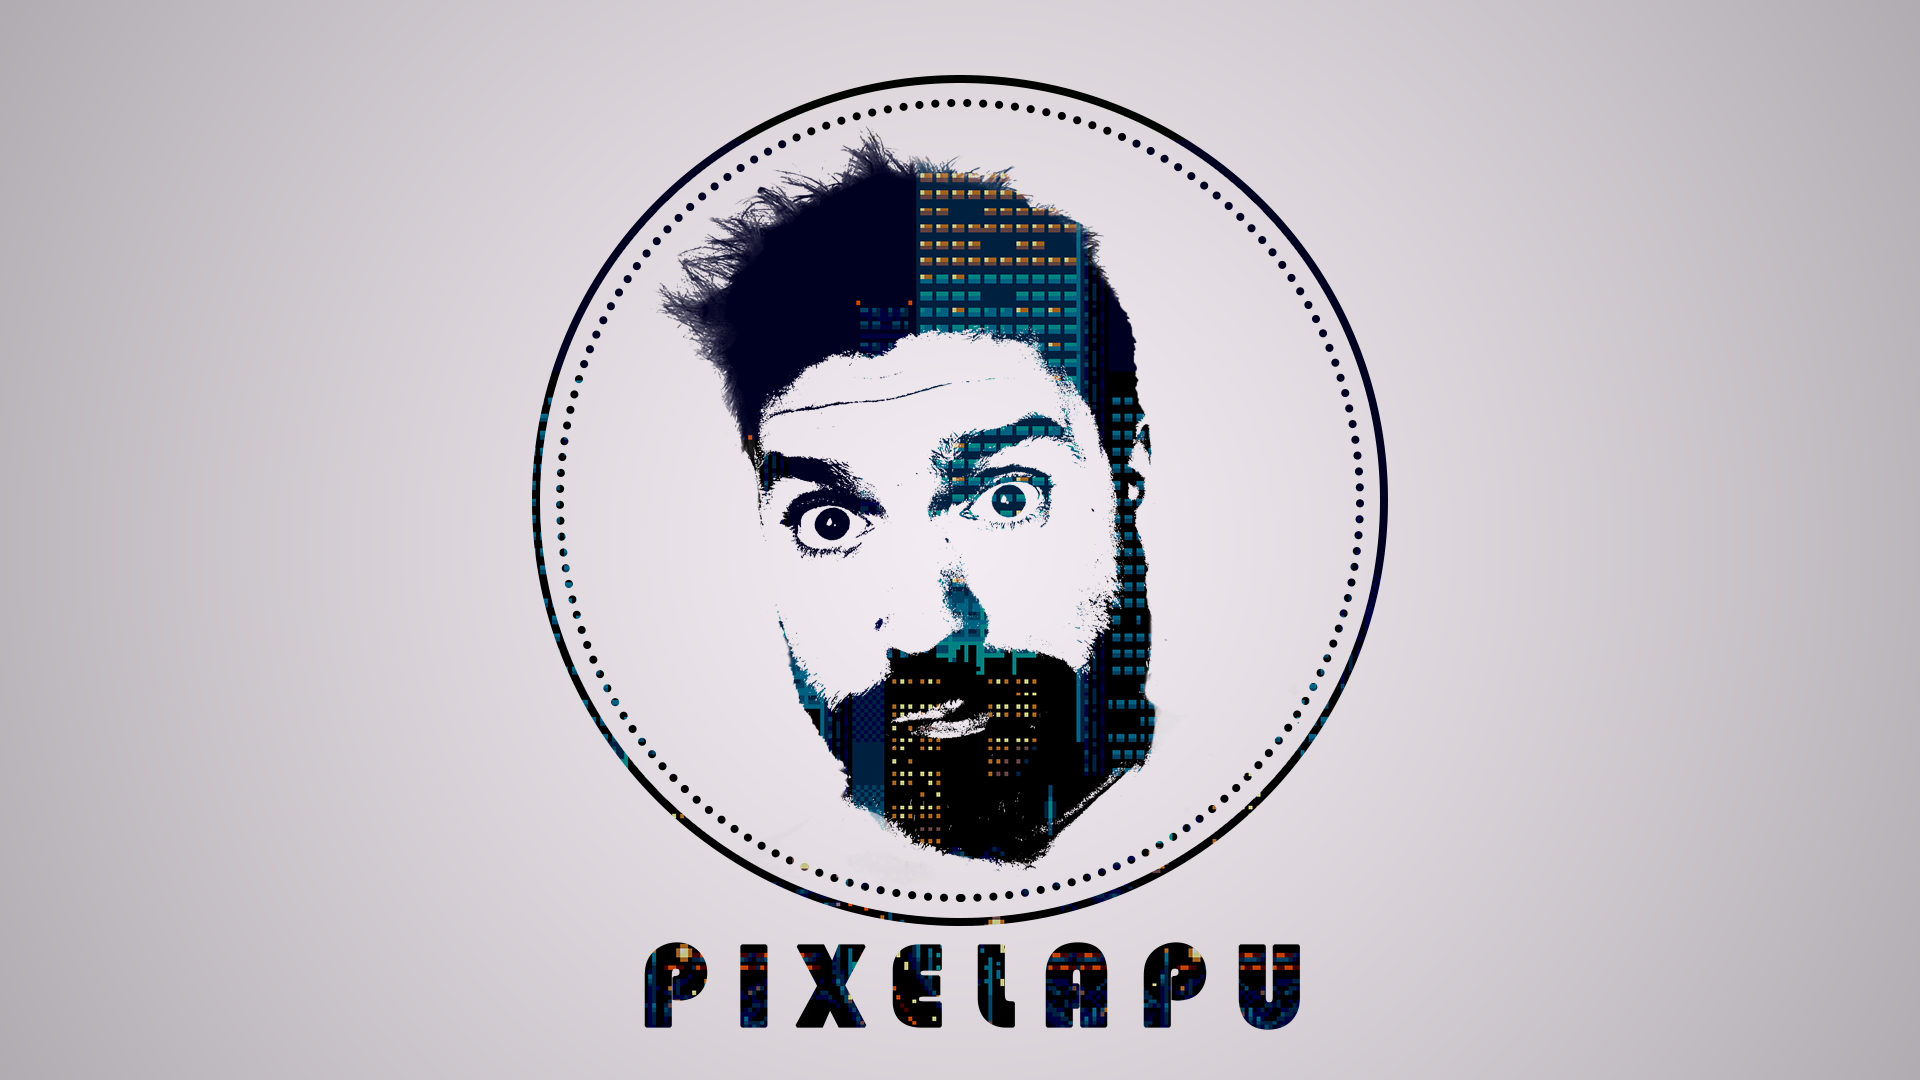 pixelapu_logo.png